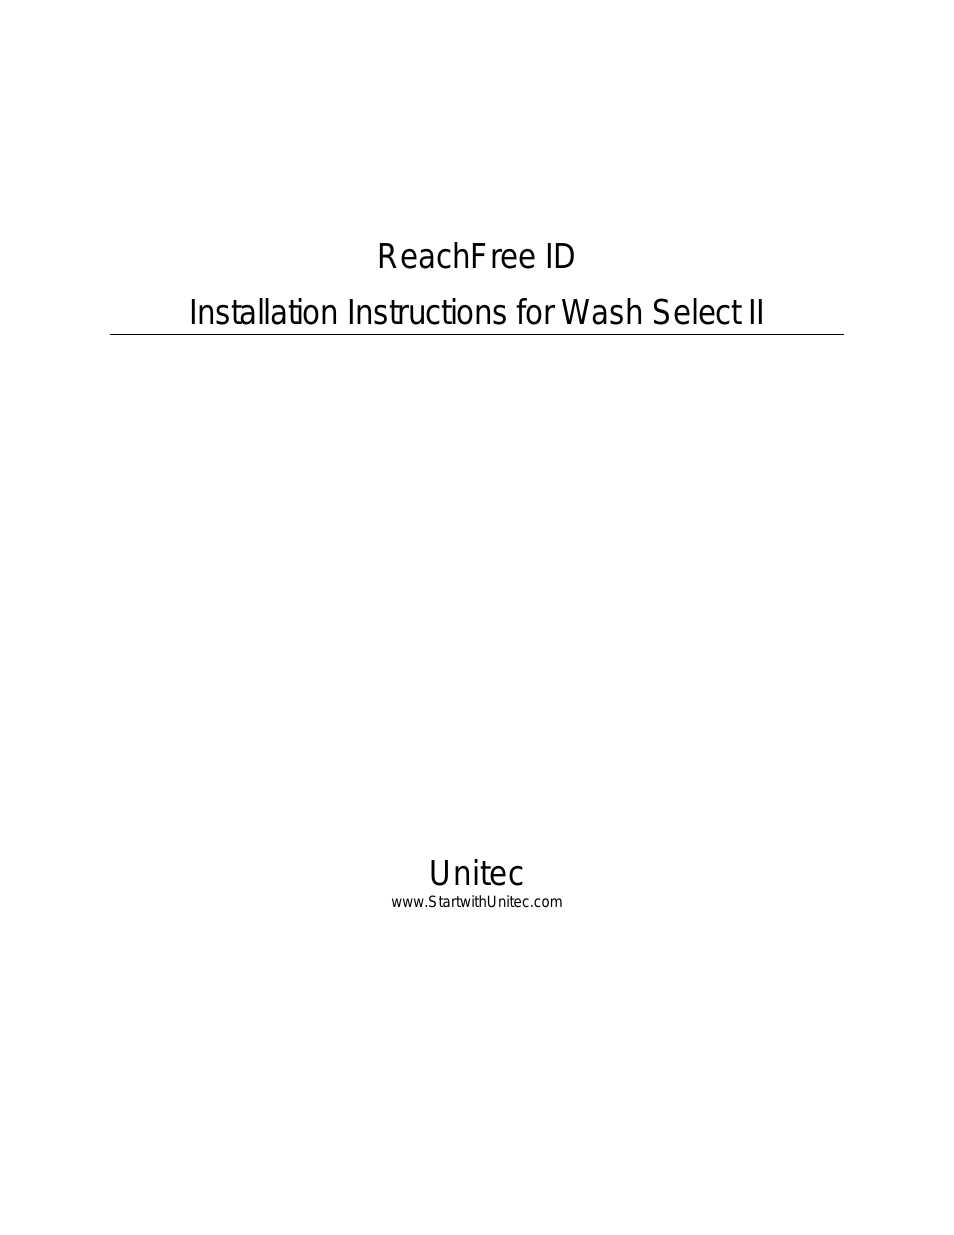 ReachFree ID for Wash Select II